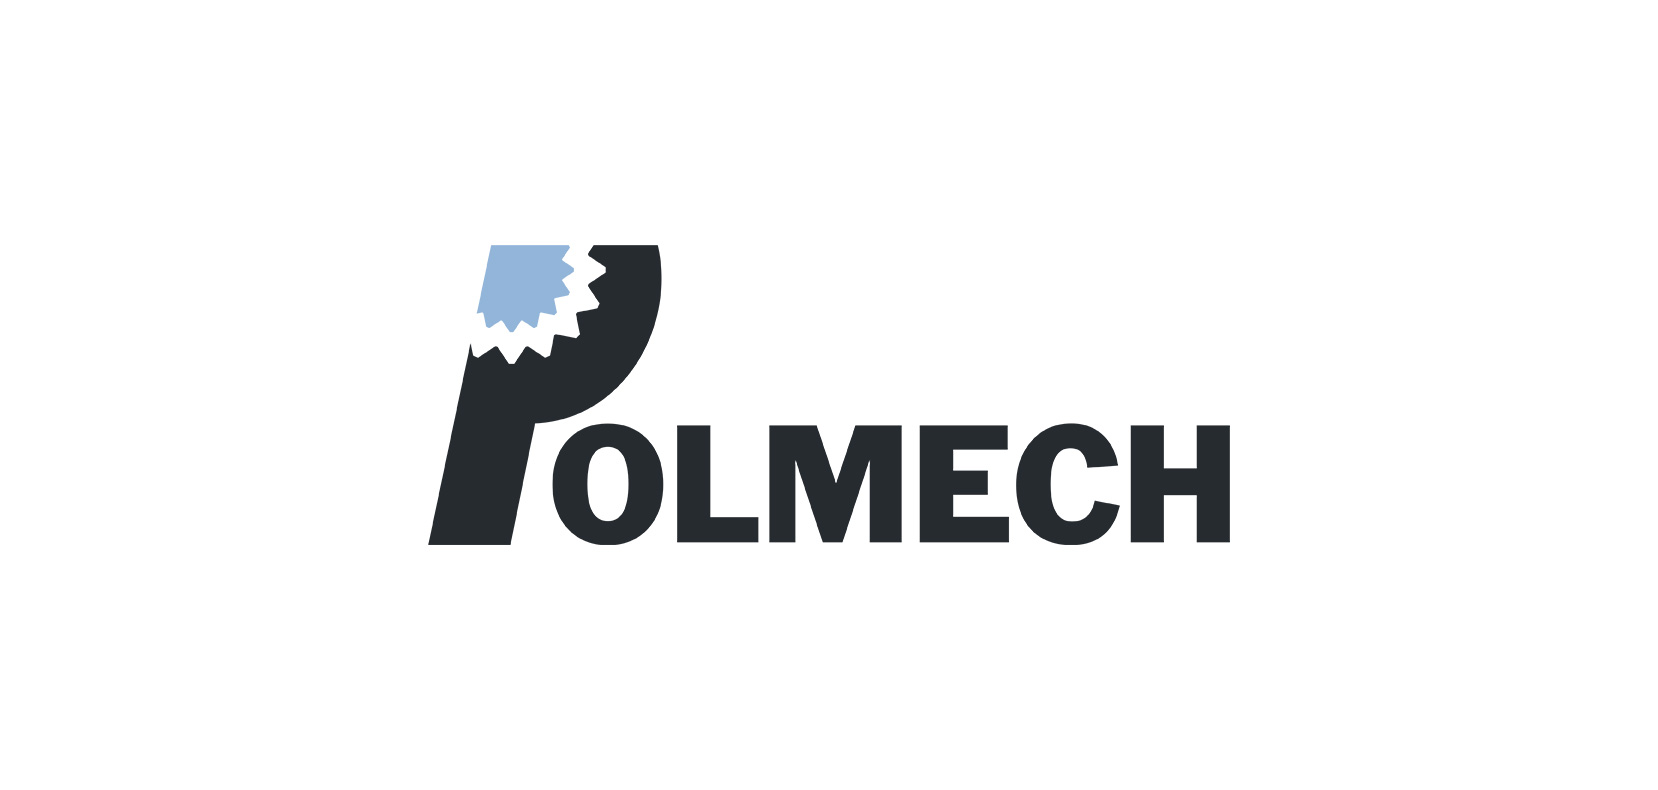 polmech logo